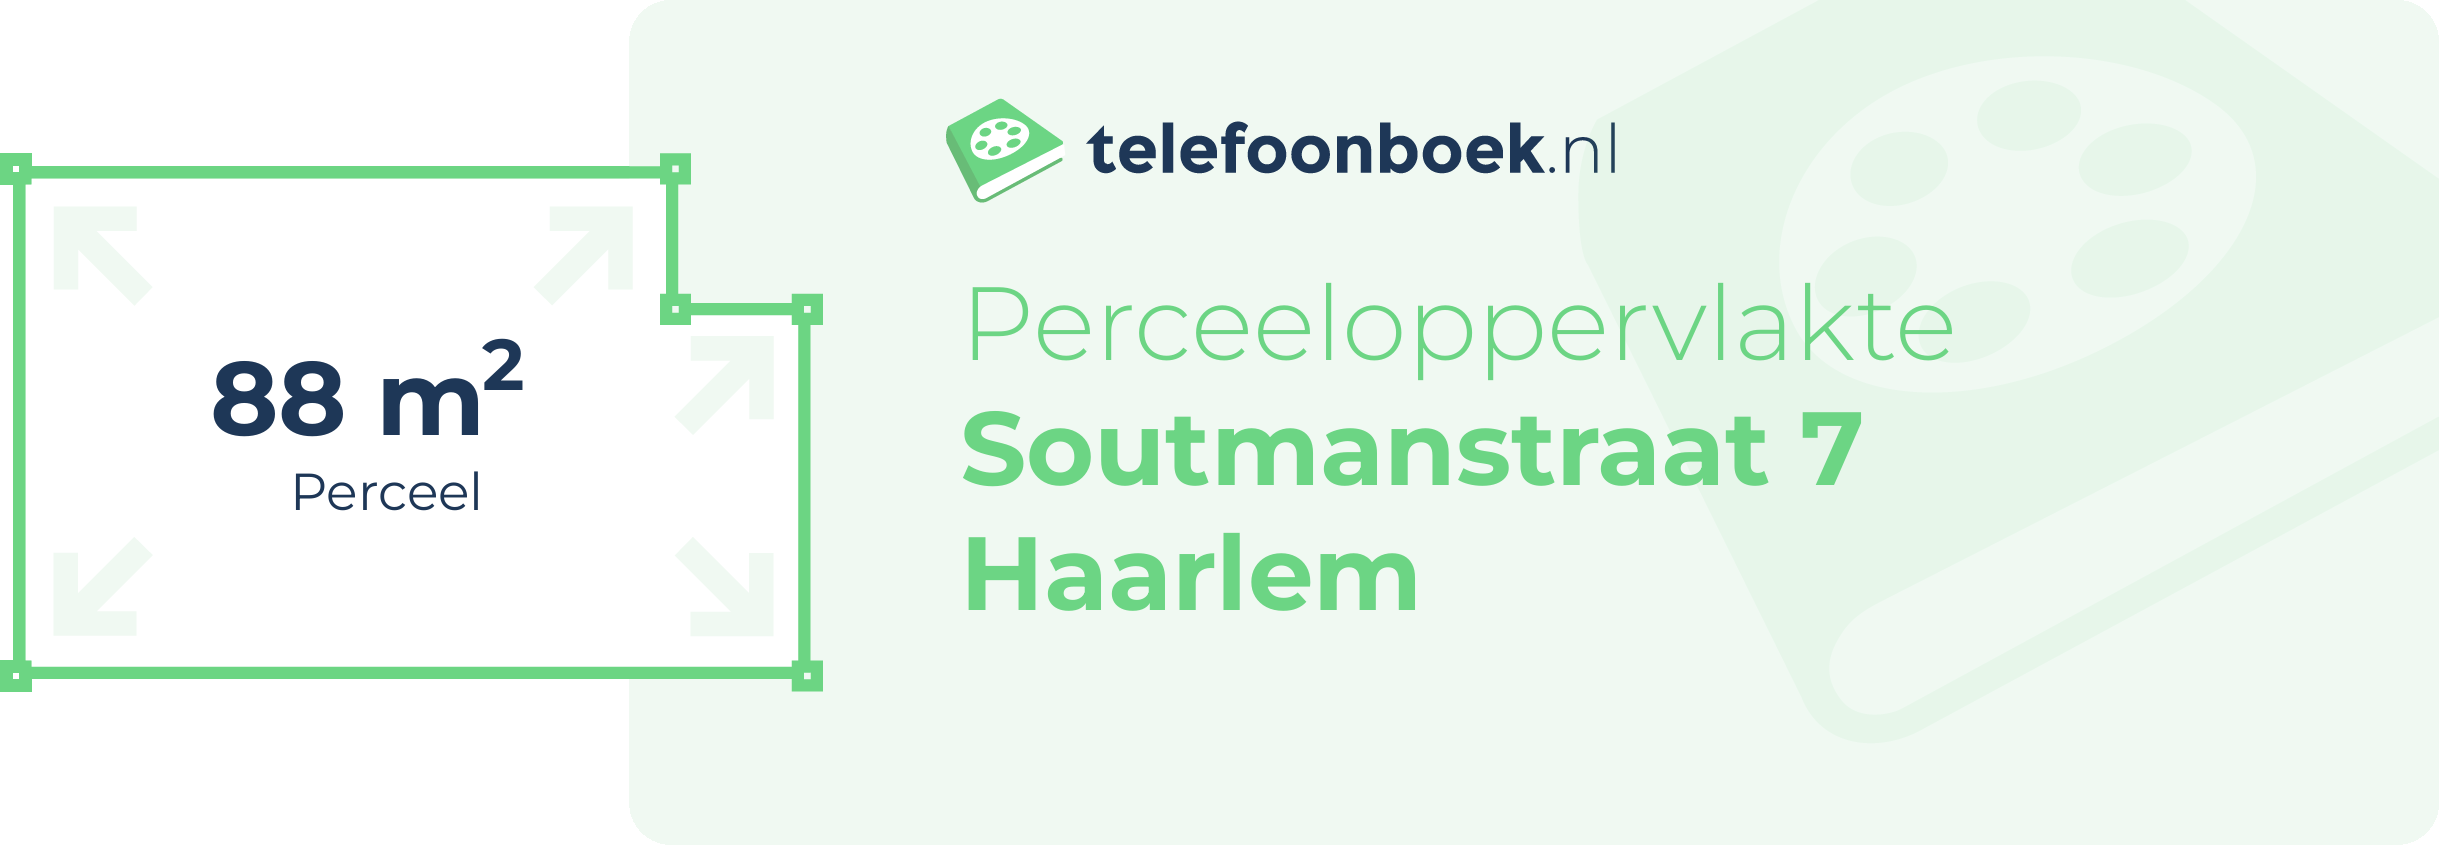 Perceeloppervlakte Soutmanstraat 7 Haarlem